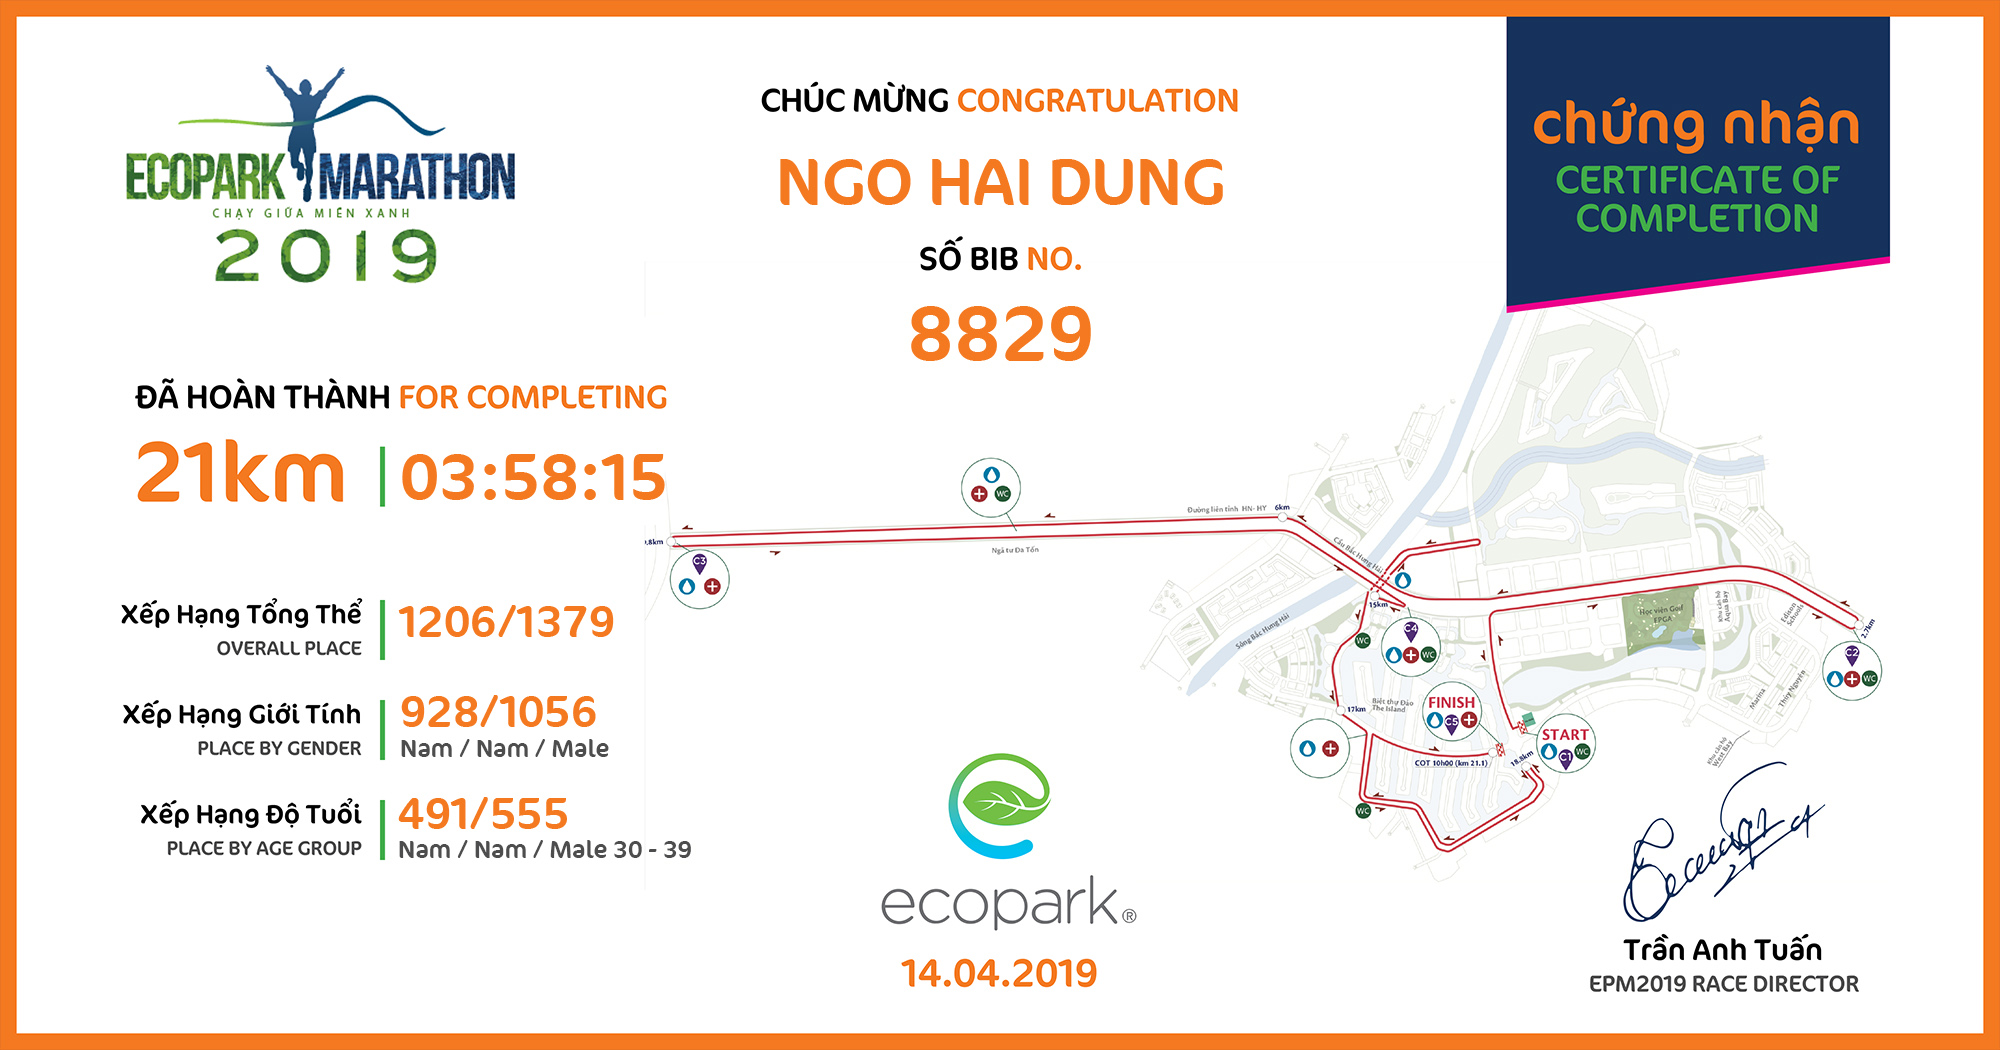 8829 - NGO HAI DUNG